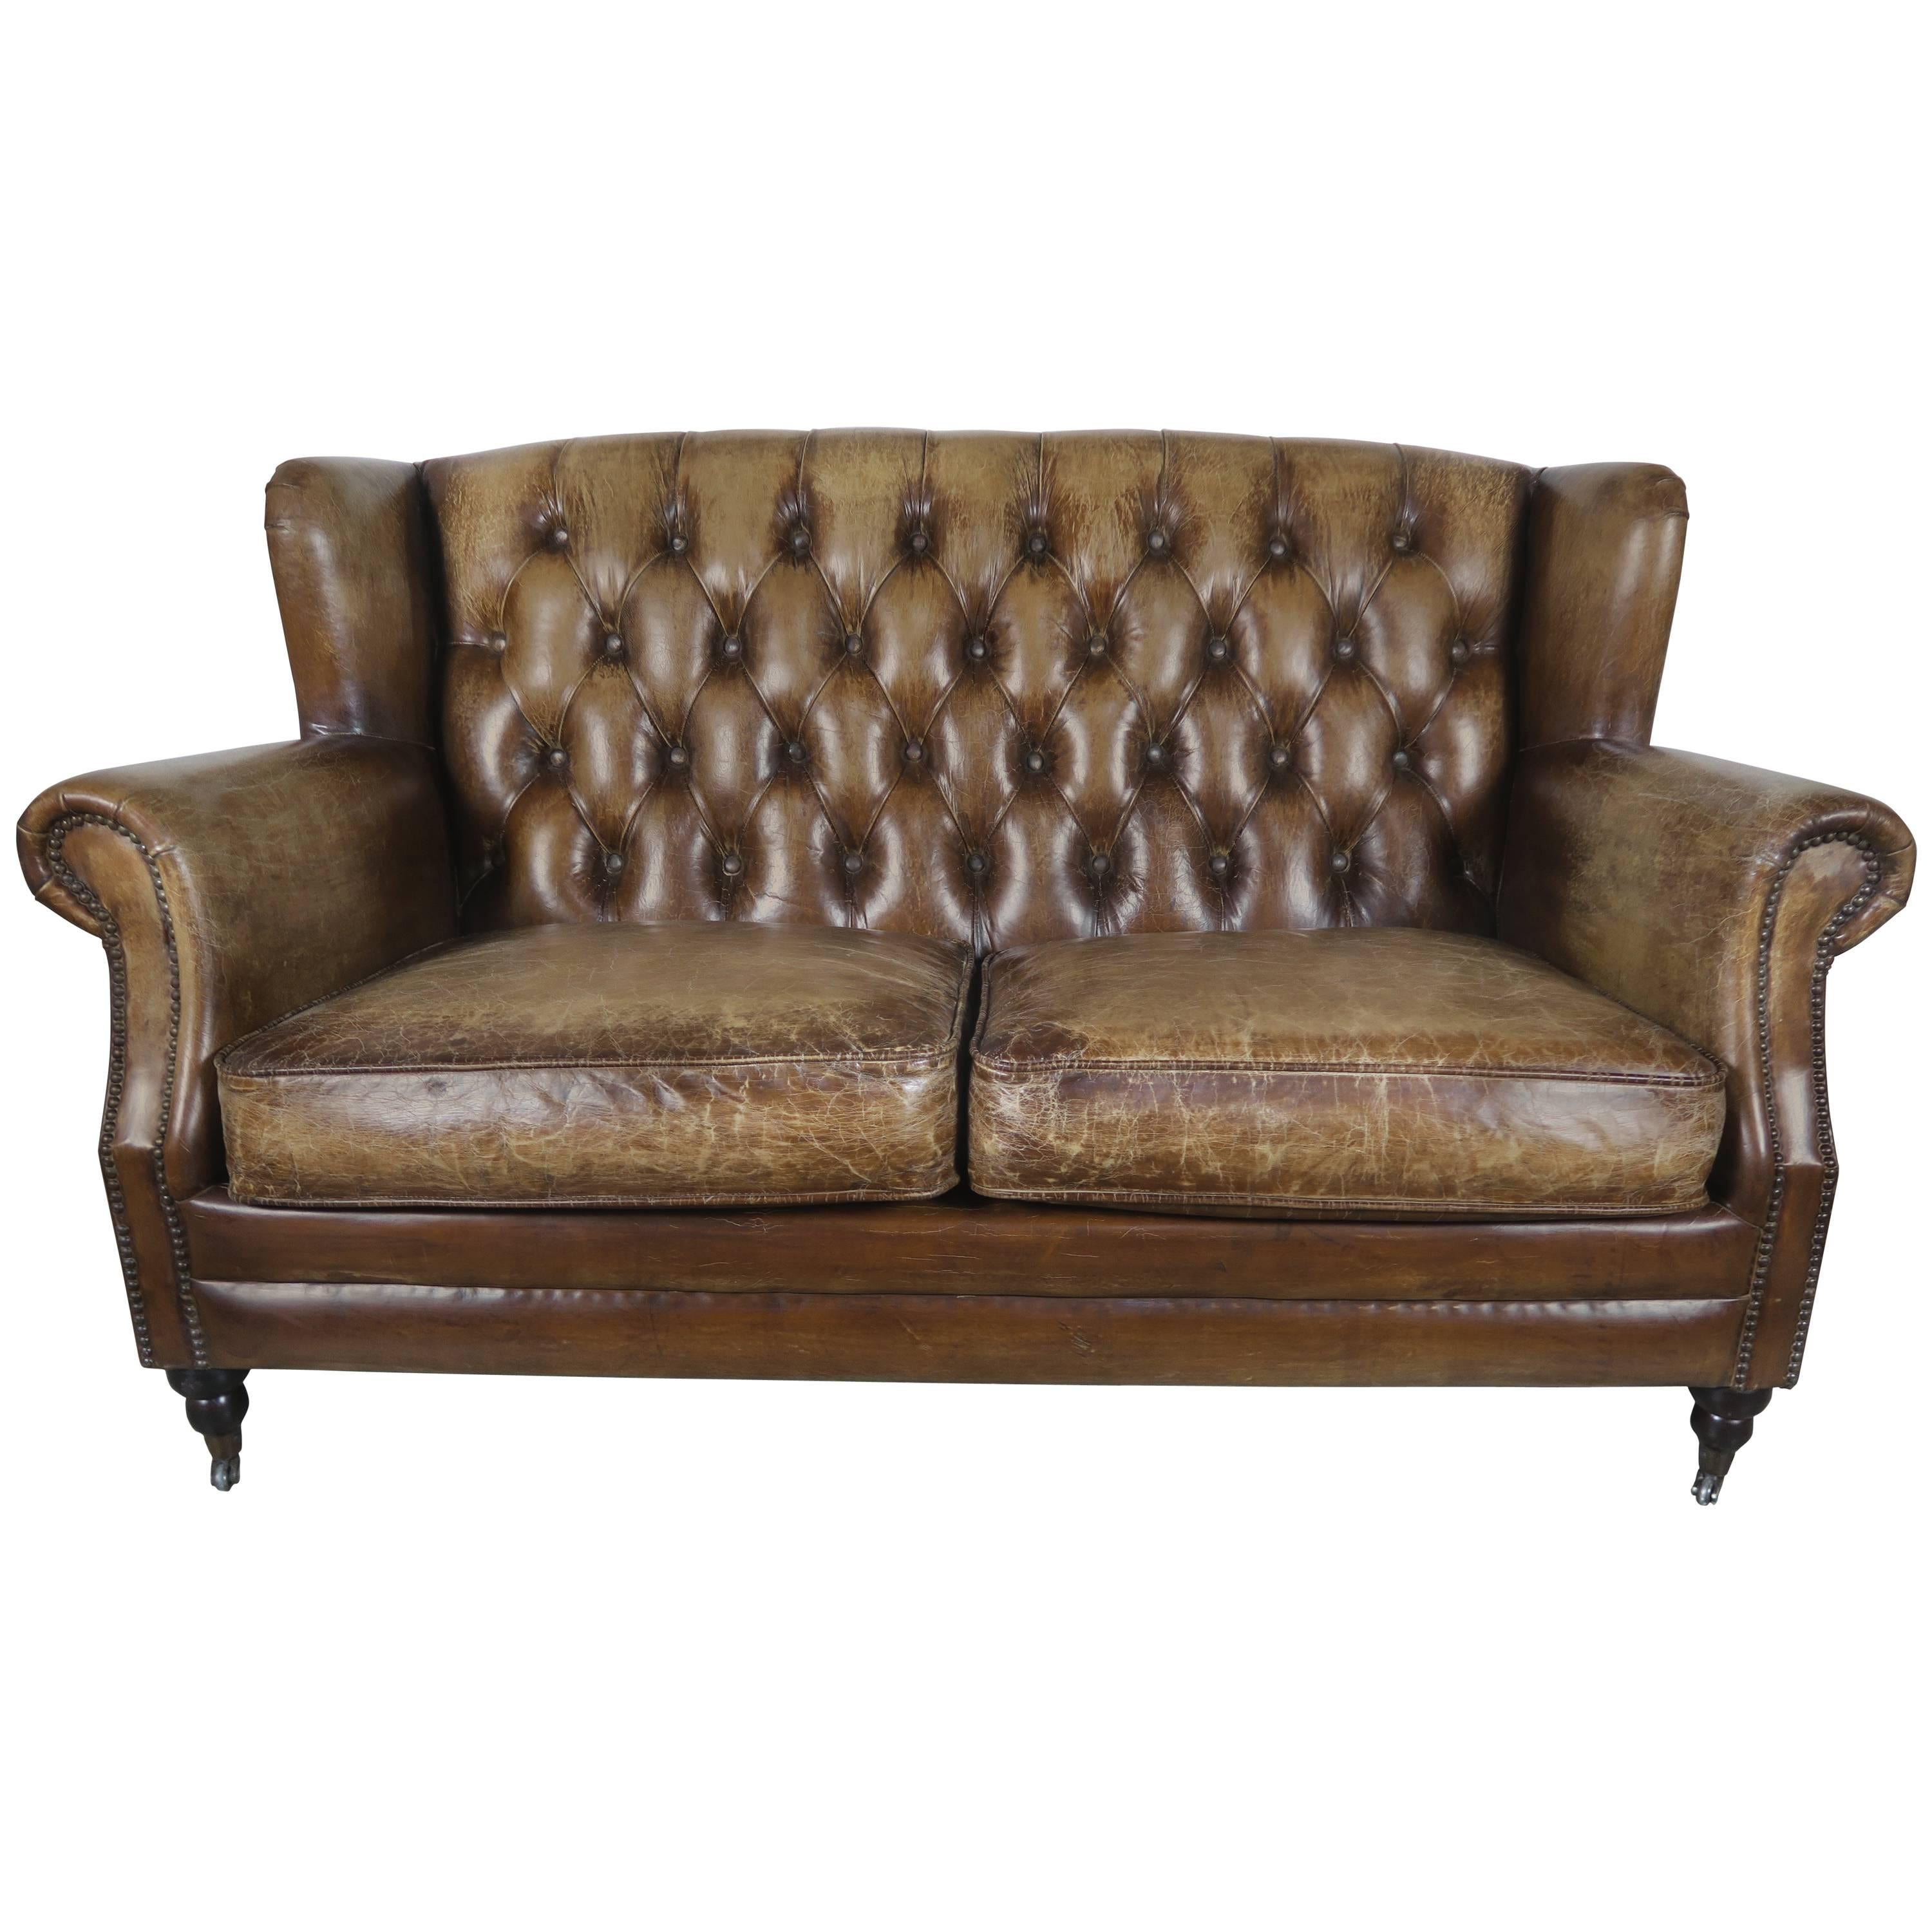 English Leather Tufted Sofa with Nailhead Trim Detail